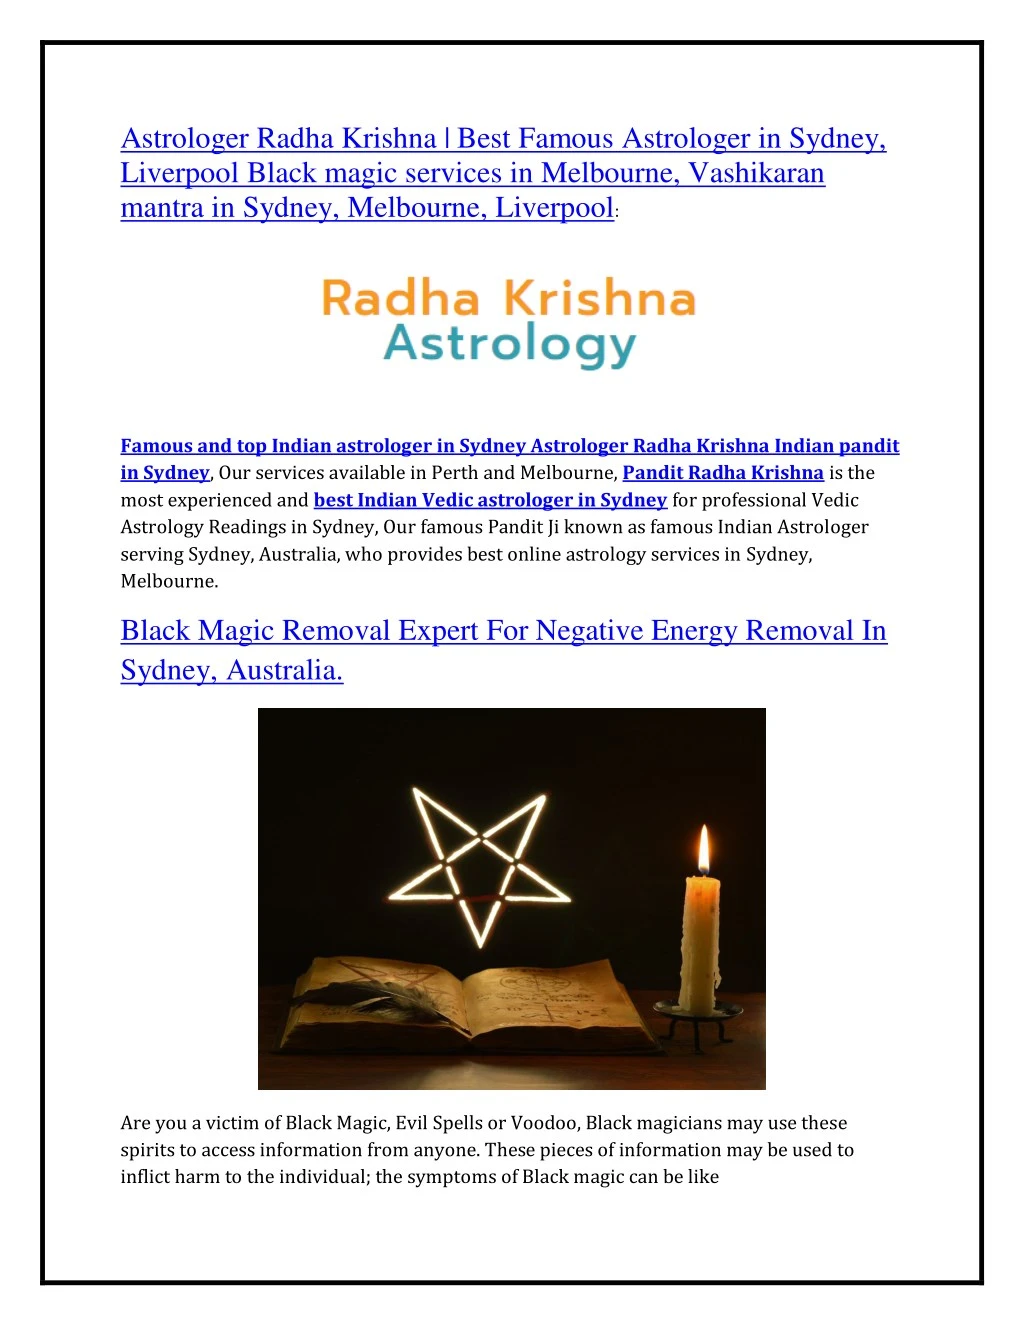 astrologer radha krishna best famous astrologer